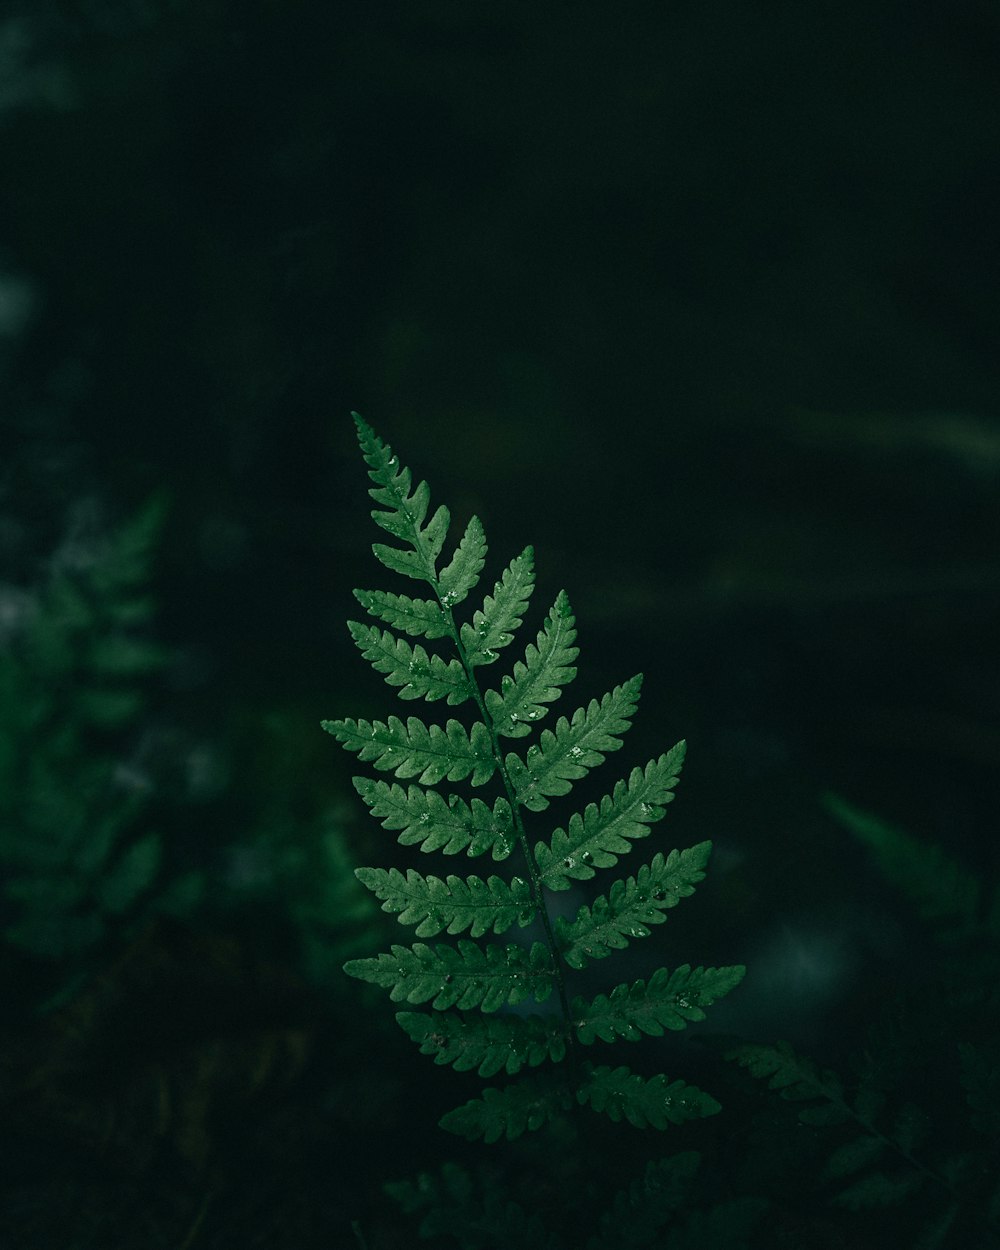 pianta di felce verde in fotografia ravvicinata